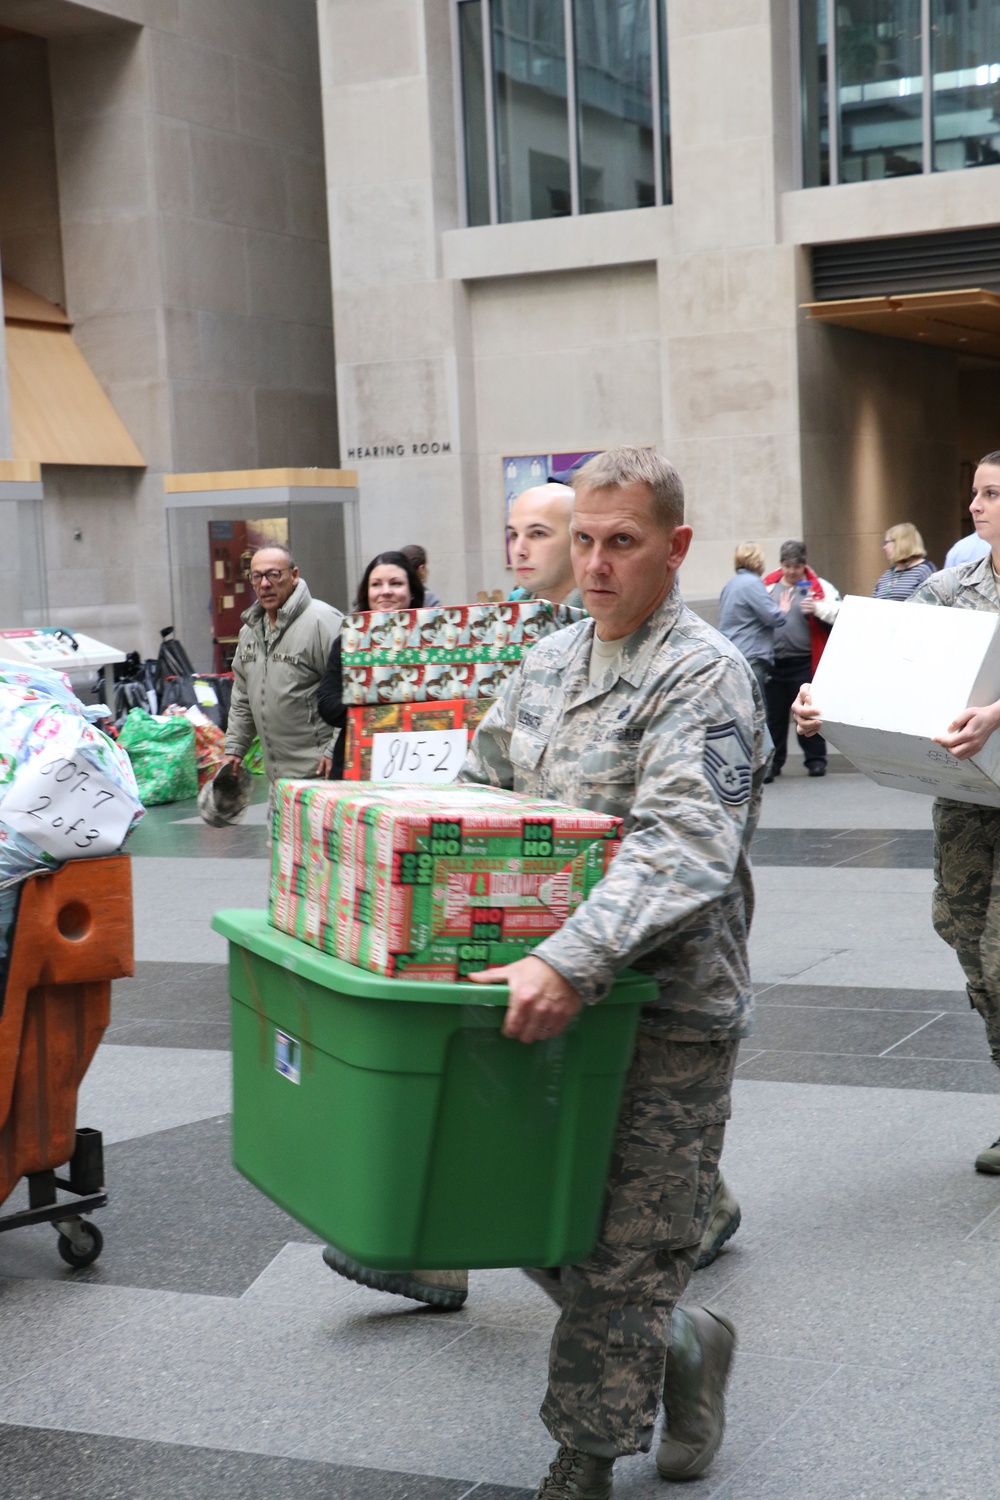 Pennsylvania National Guard helps Holiday Wish Program